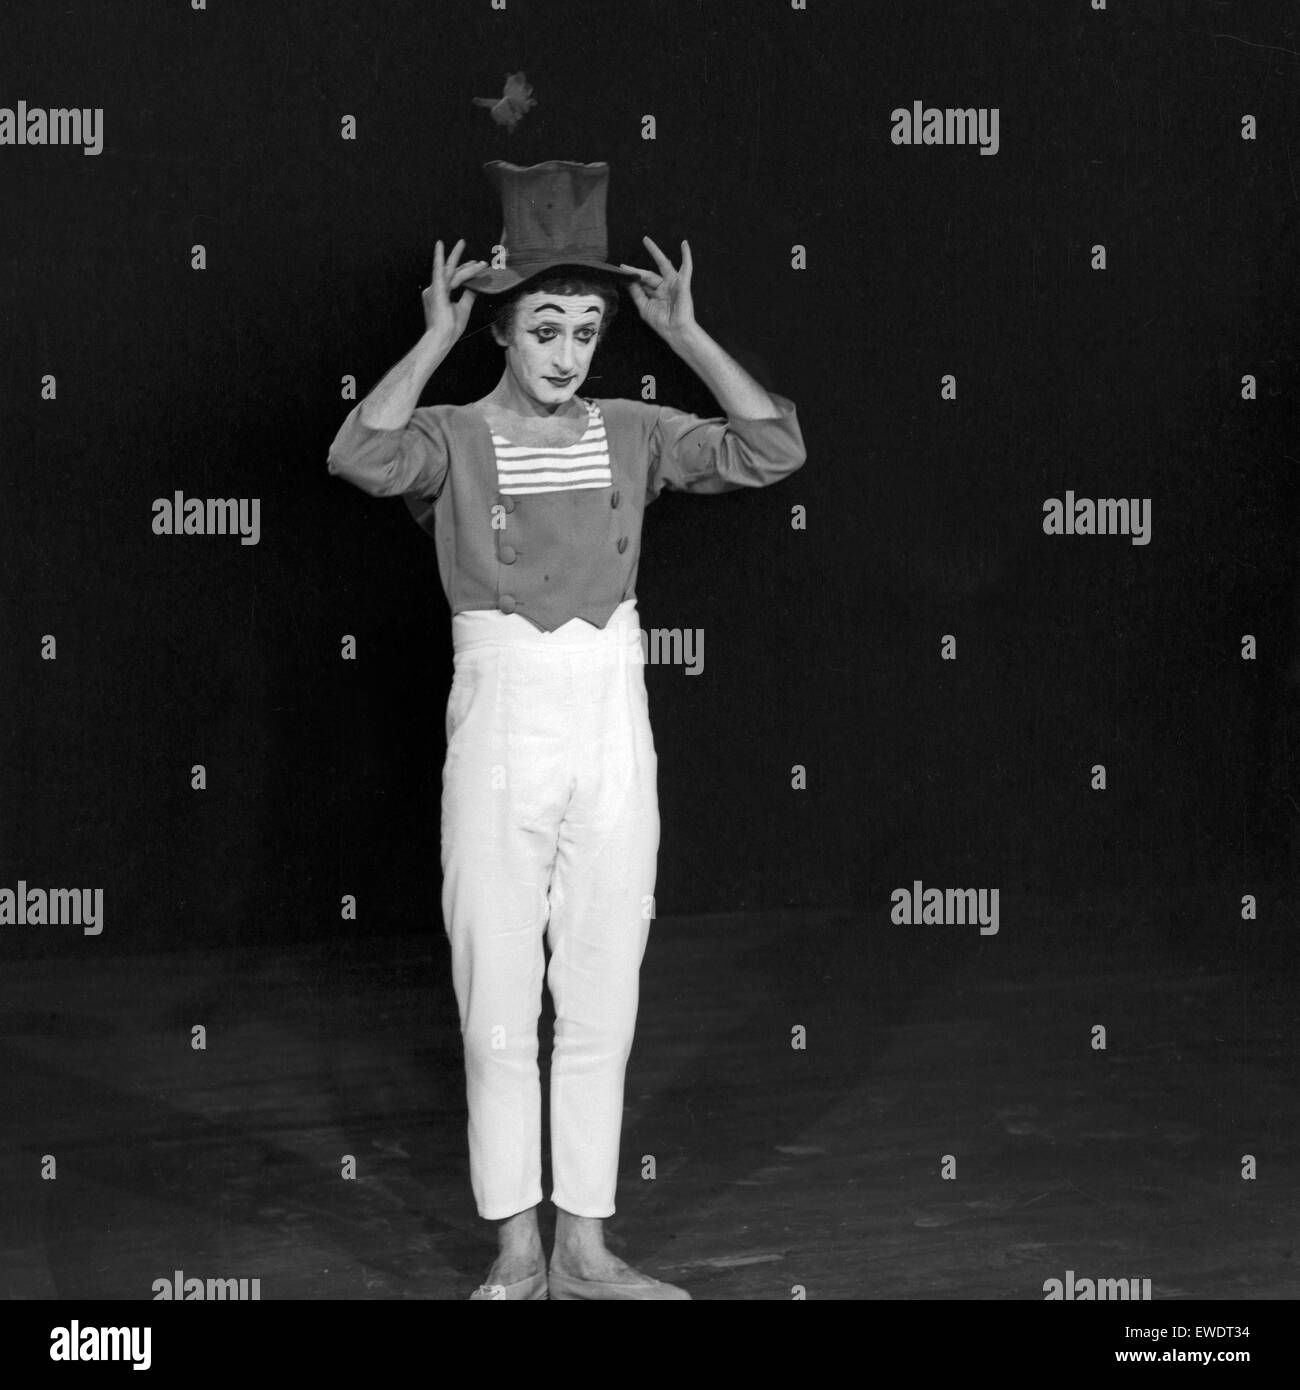 Französischer Pantomime Marcel Marceau in Hamburg, Deutschland 1960er Jahre. French pantomime Marcel Marceau performing in Hamburg, Germany 1960s. Stock Photo